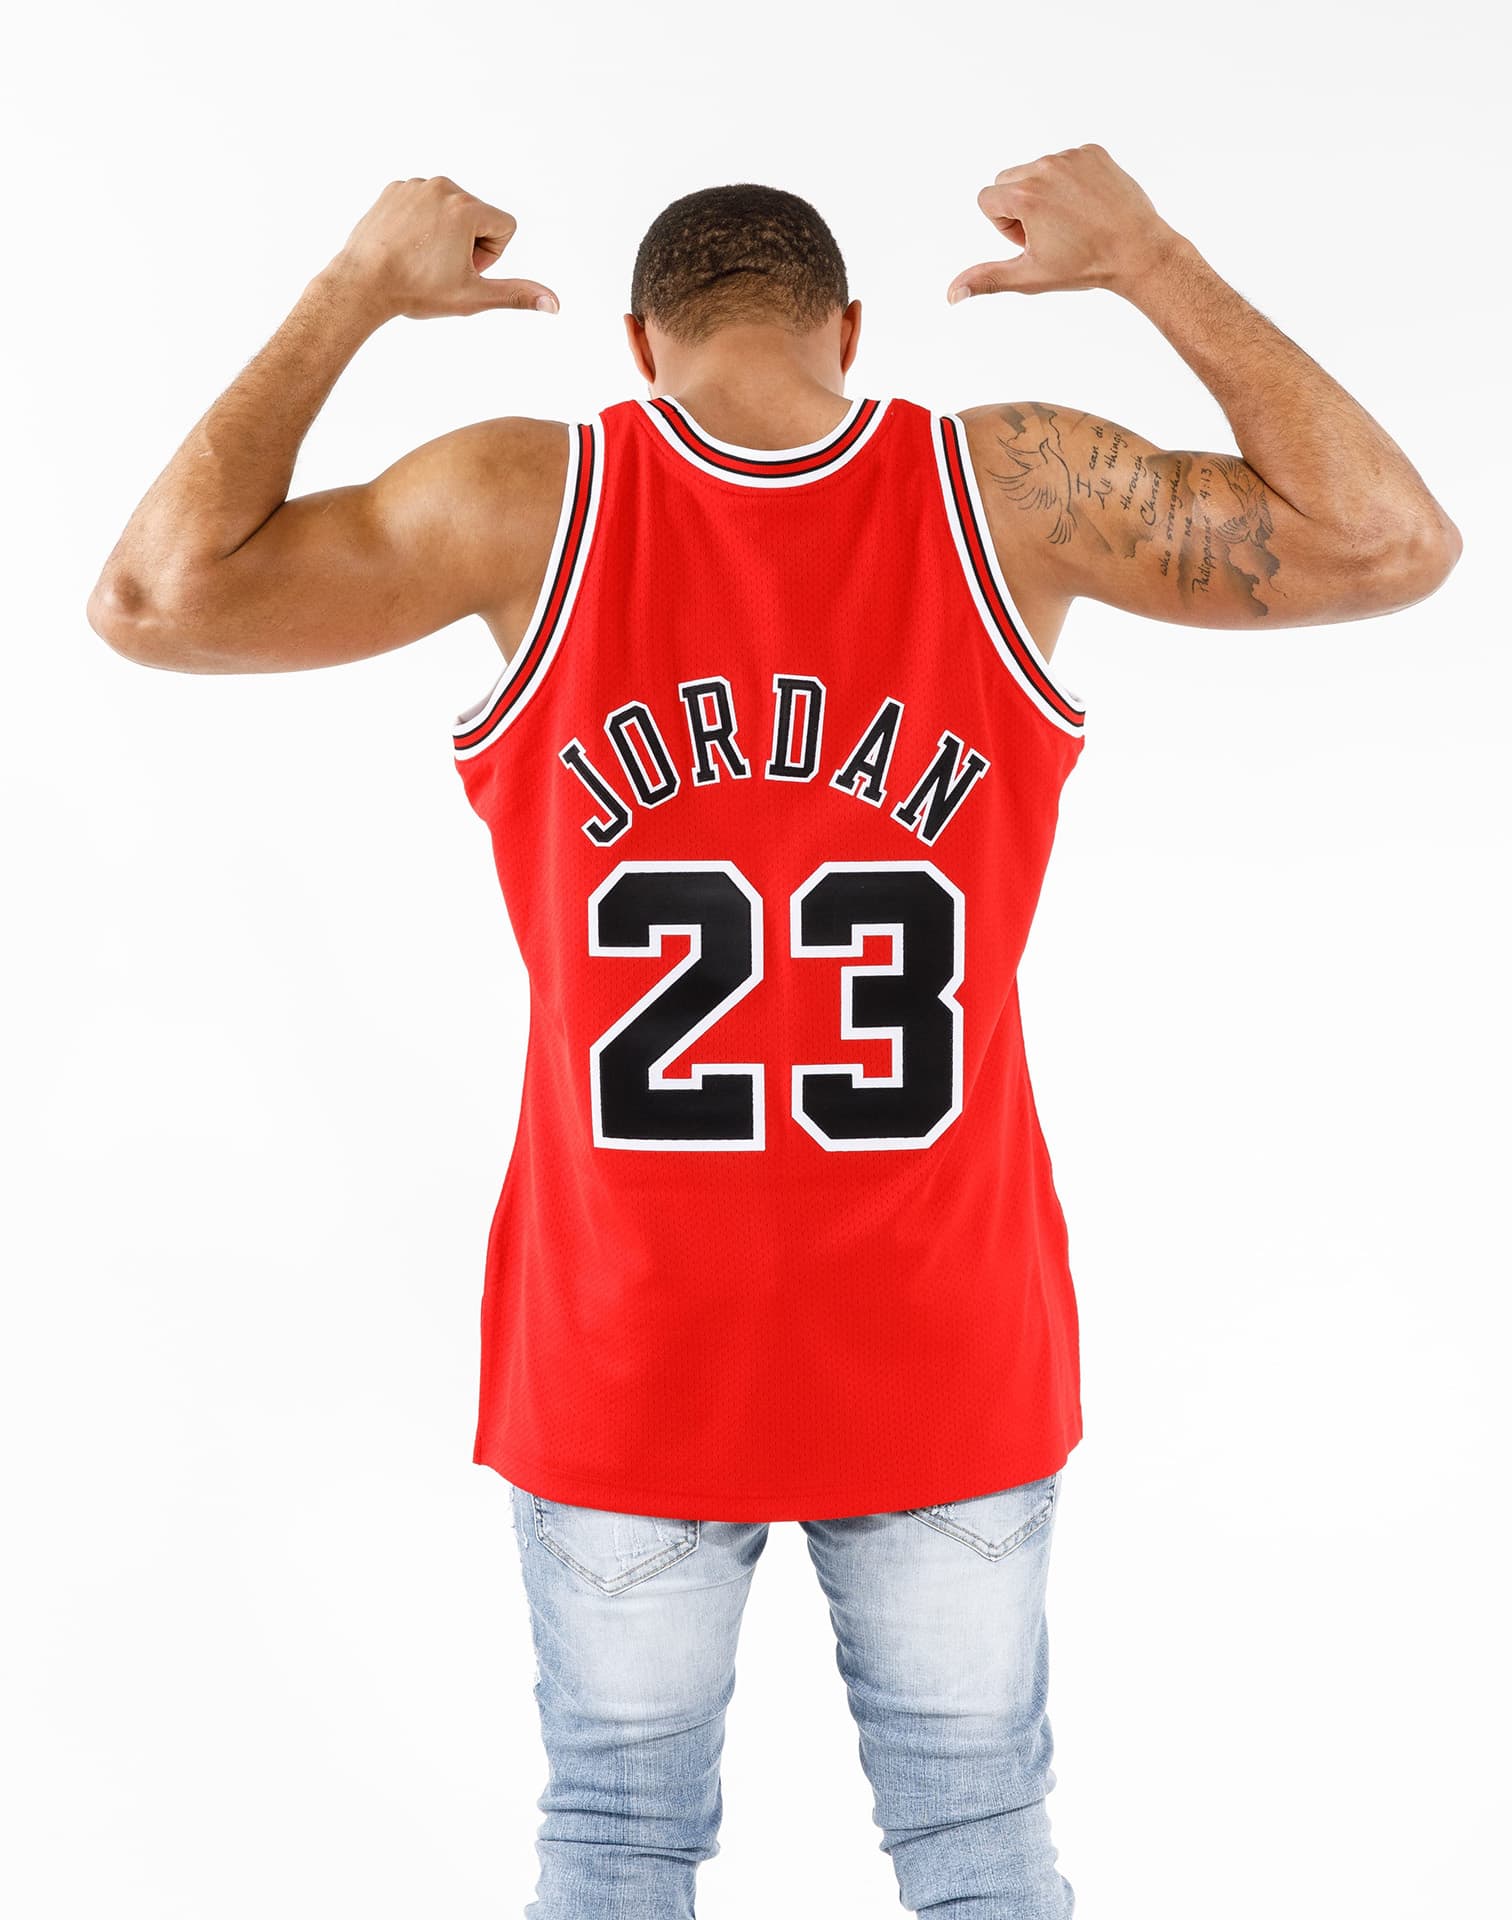 Mitchell & Ness Nba Authentic Chicago Bulls Jordan 97-98 Jersey